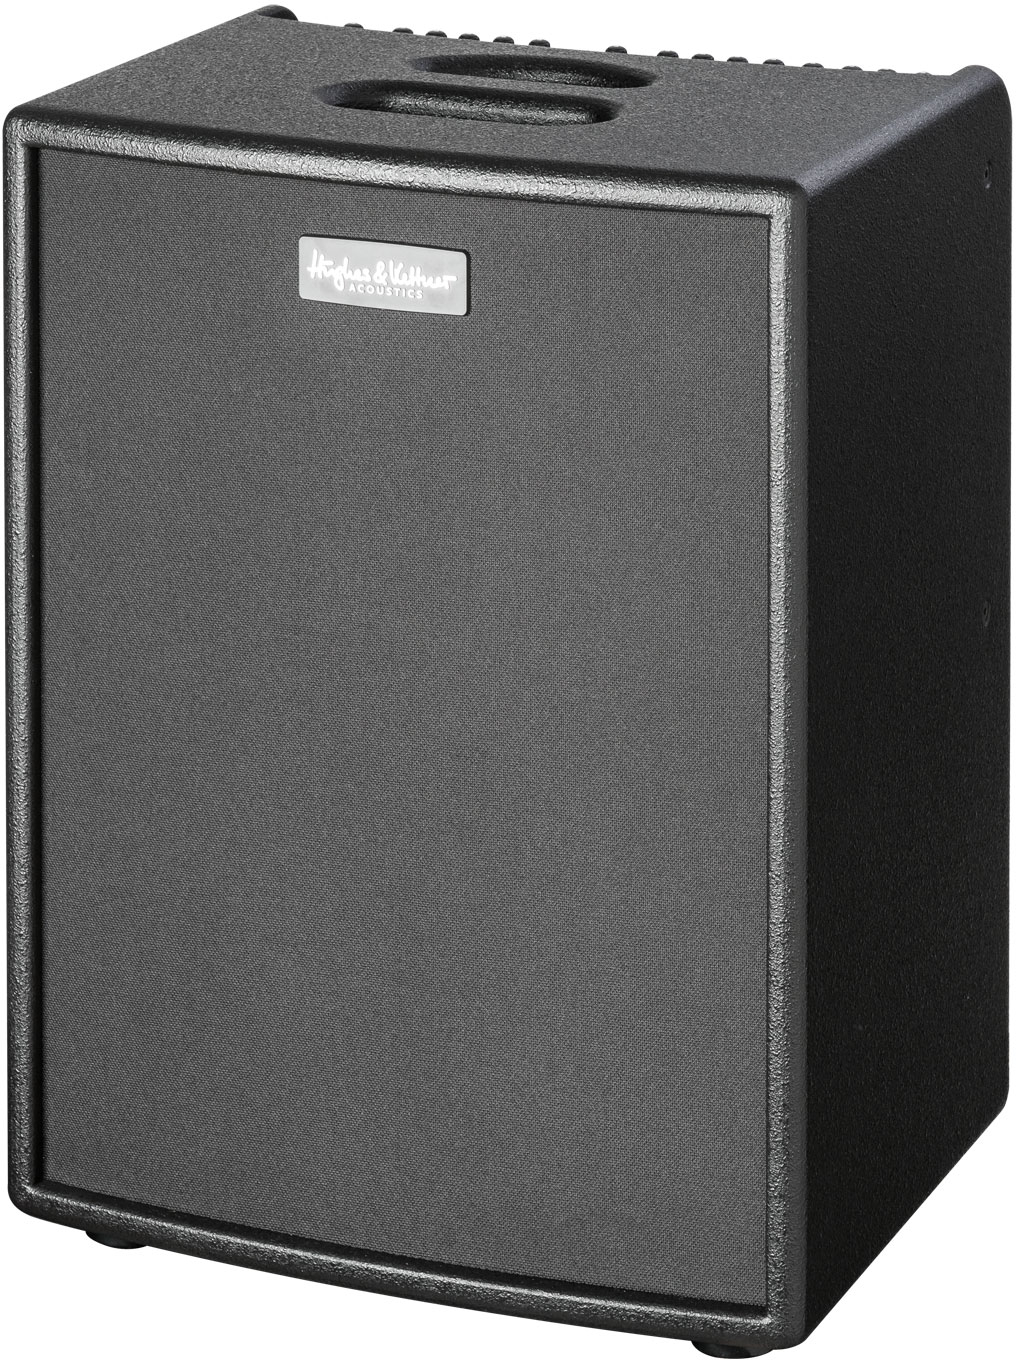 Hughes & Kettner Era 2 400w 2x8 Black - Combo Ampli Acoustique - Variation 1